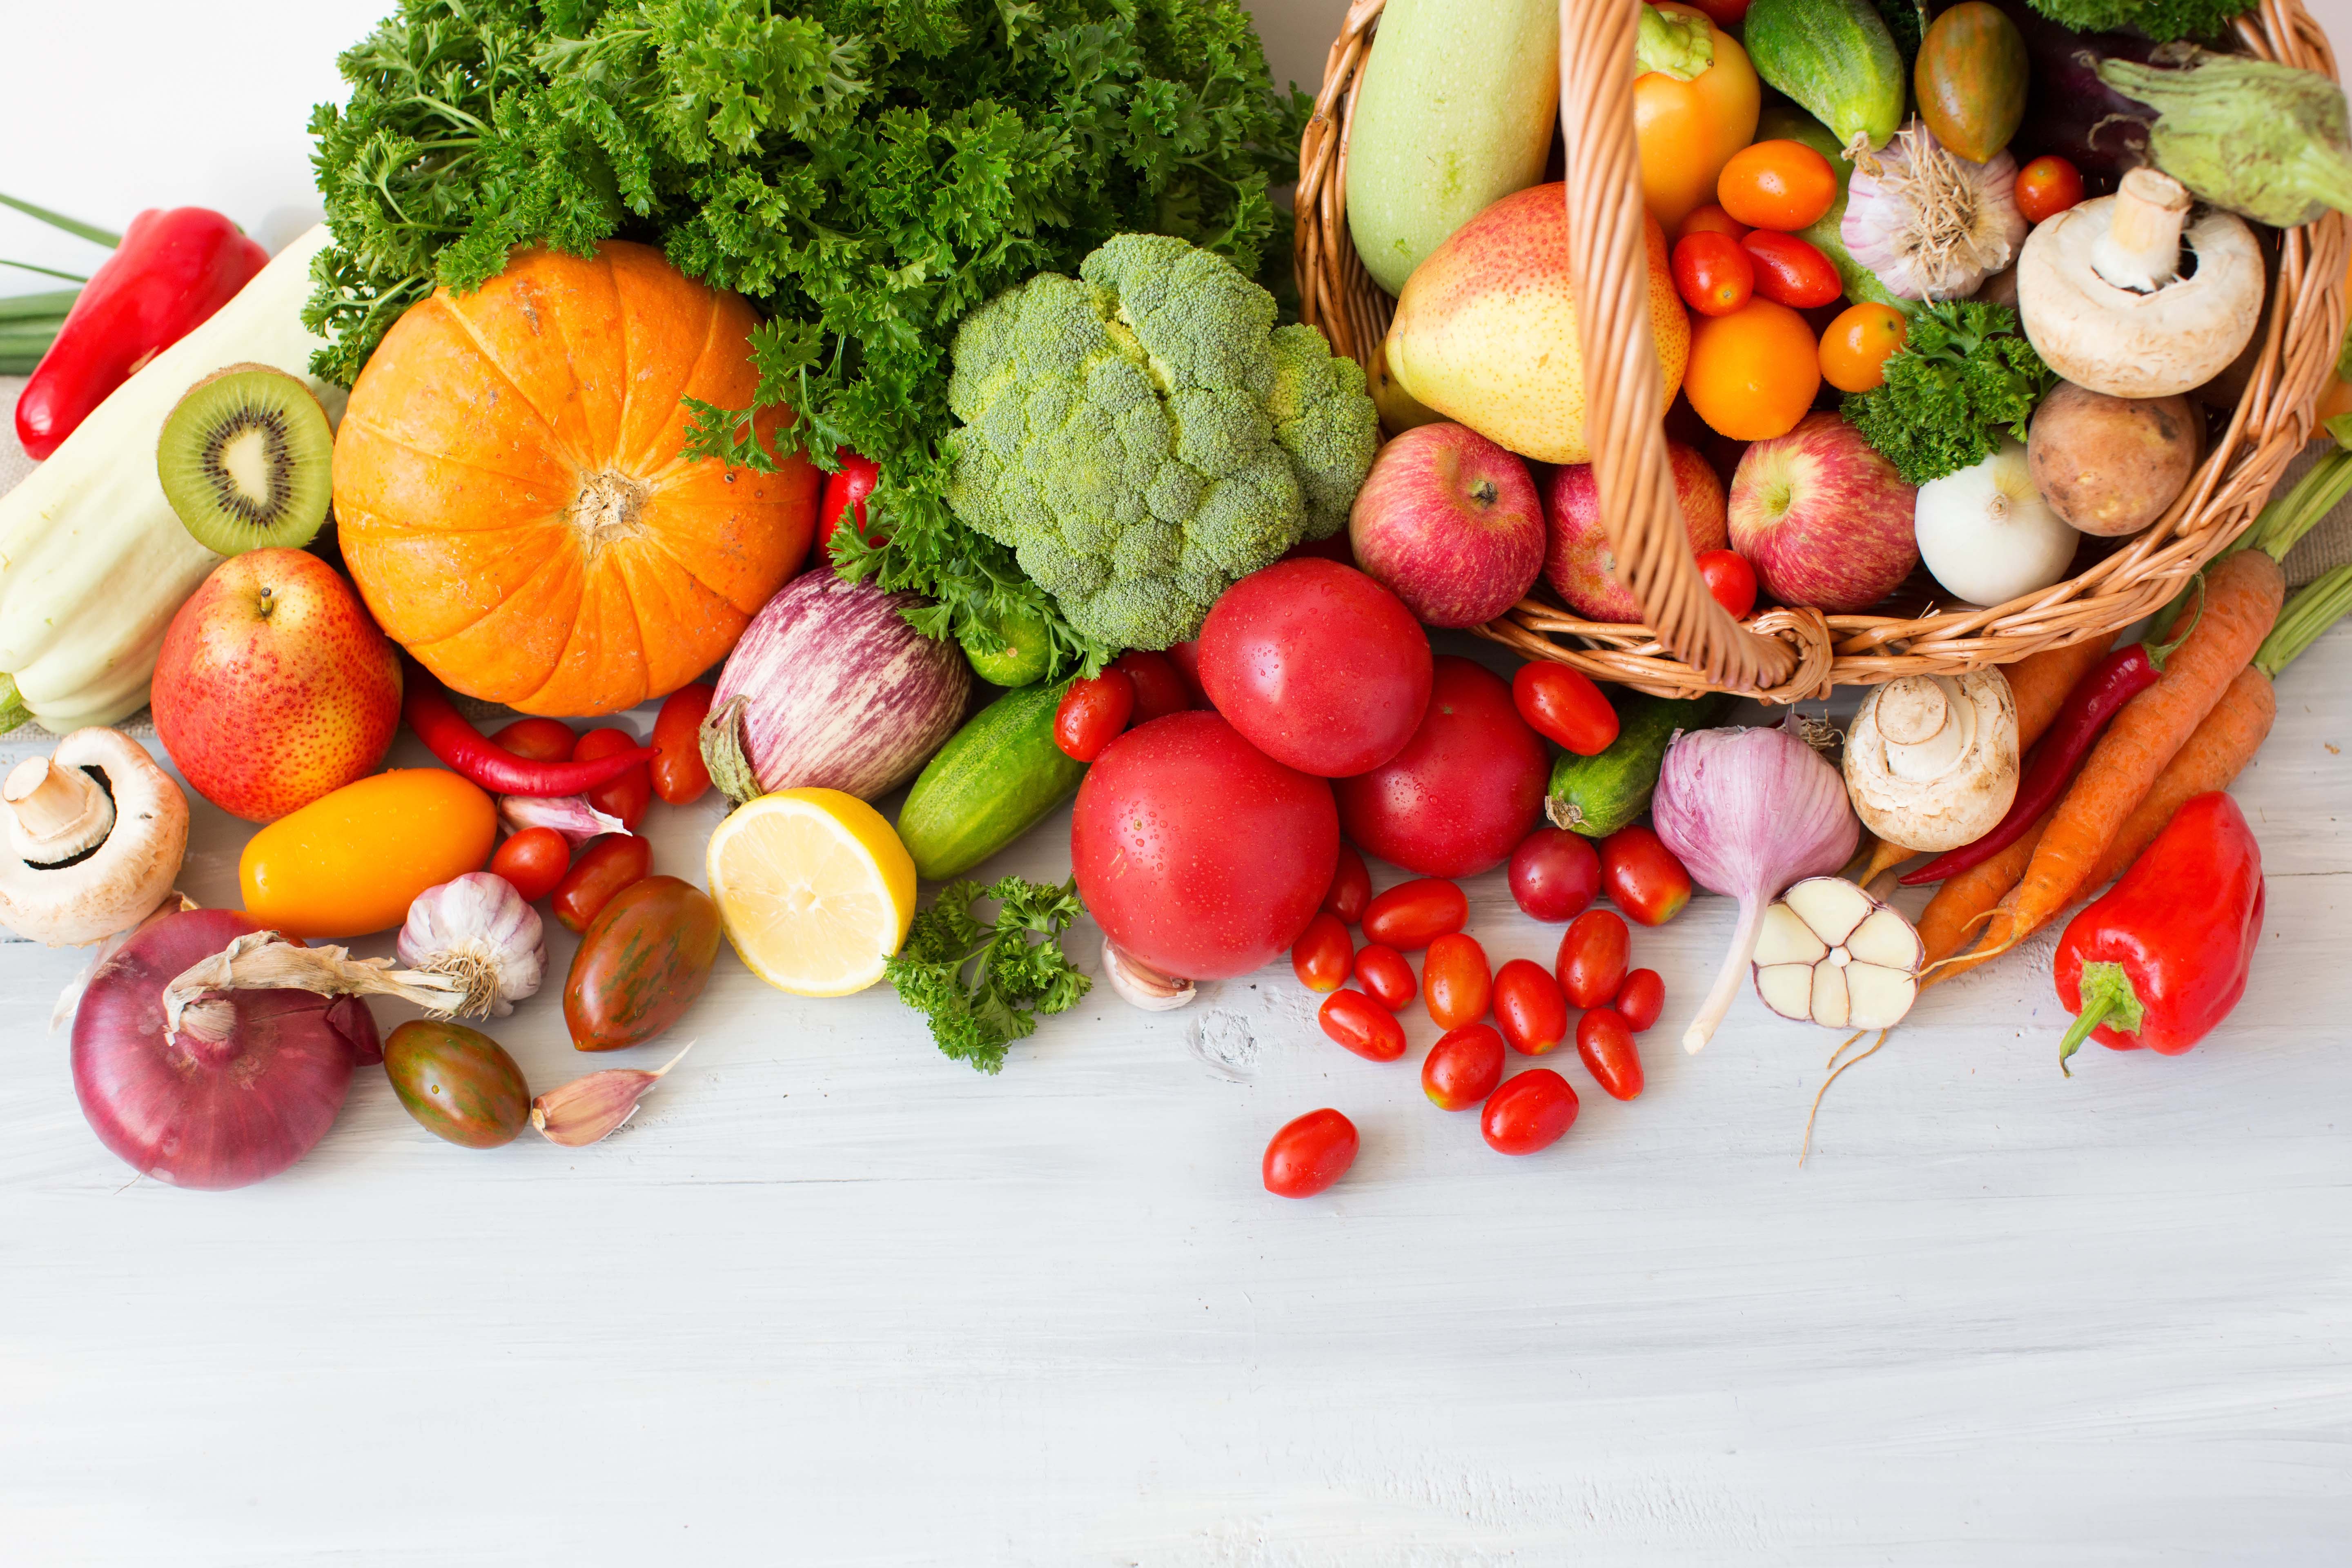 Colourful and crunchy fruit and vegetables can. Овощи и фрукты. Свежие овощи и фрукты. Овощи и фрукты вид сверху. Овощи сверху.